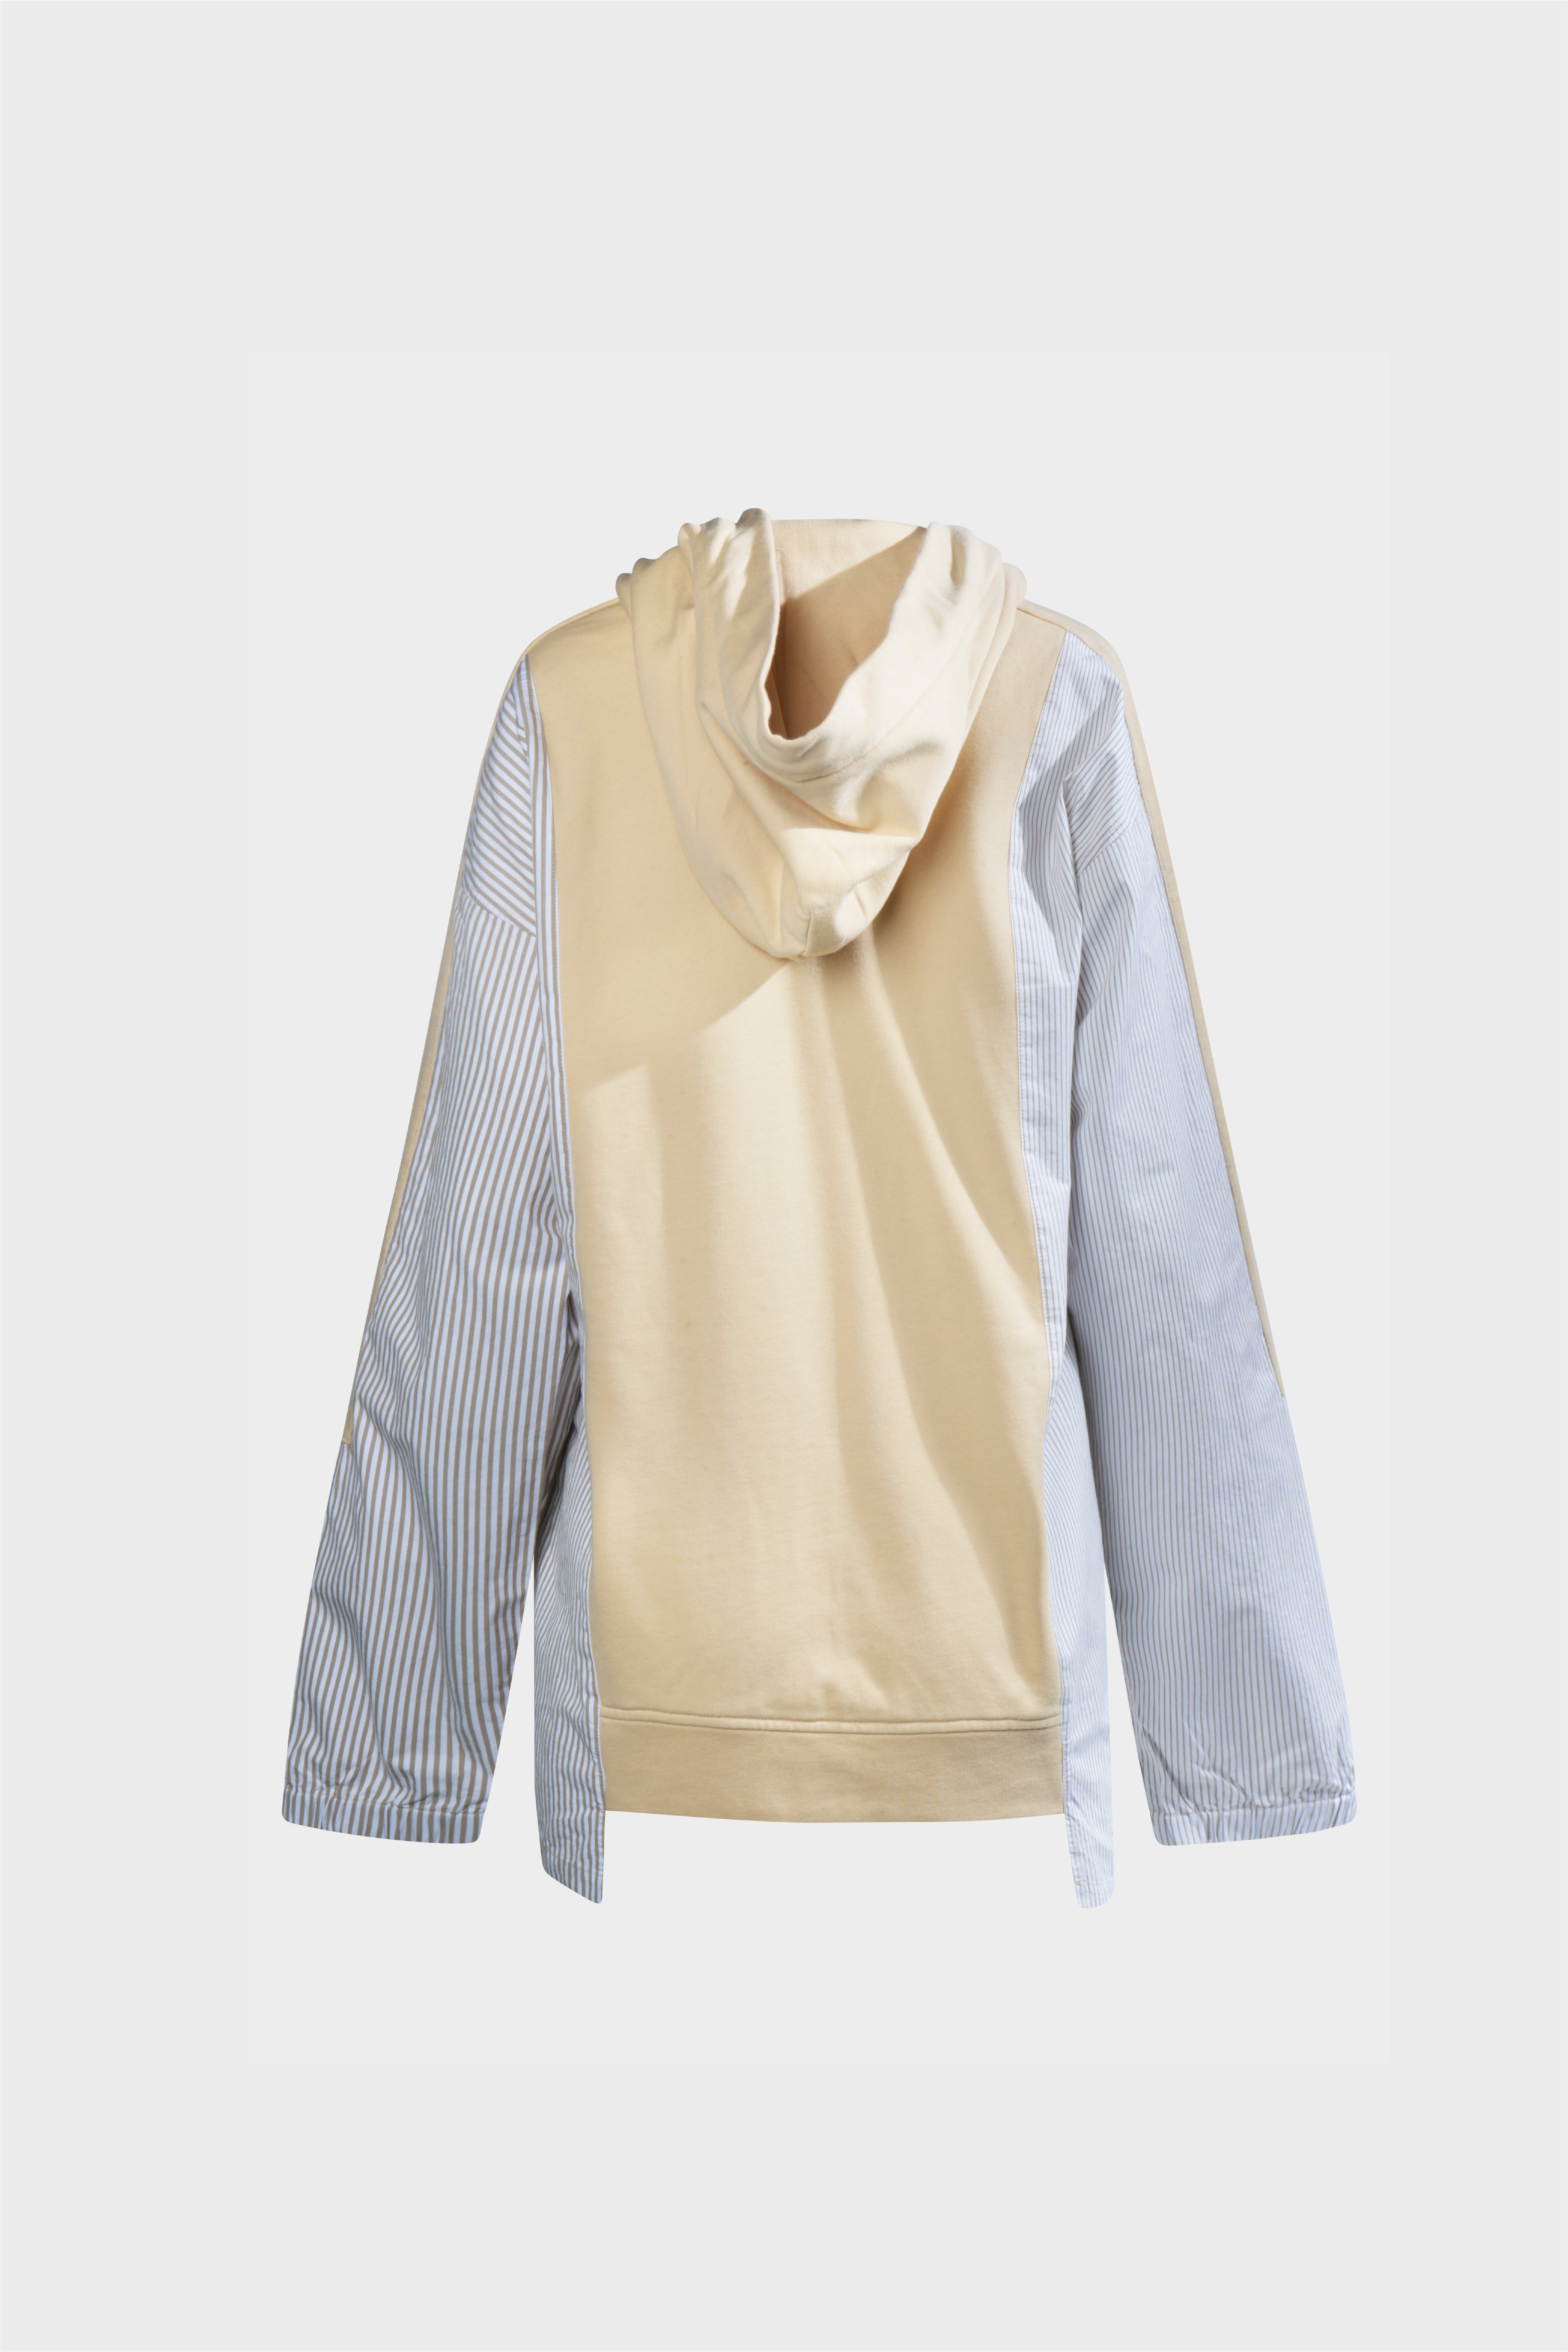 Selectshop FRAME - FENG CHEN WANG Panelled Zip-Up Hoodie Sweats-knits Concept Store Dubai